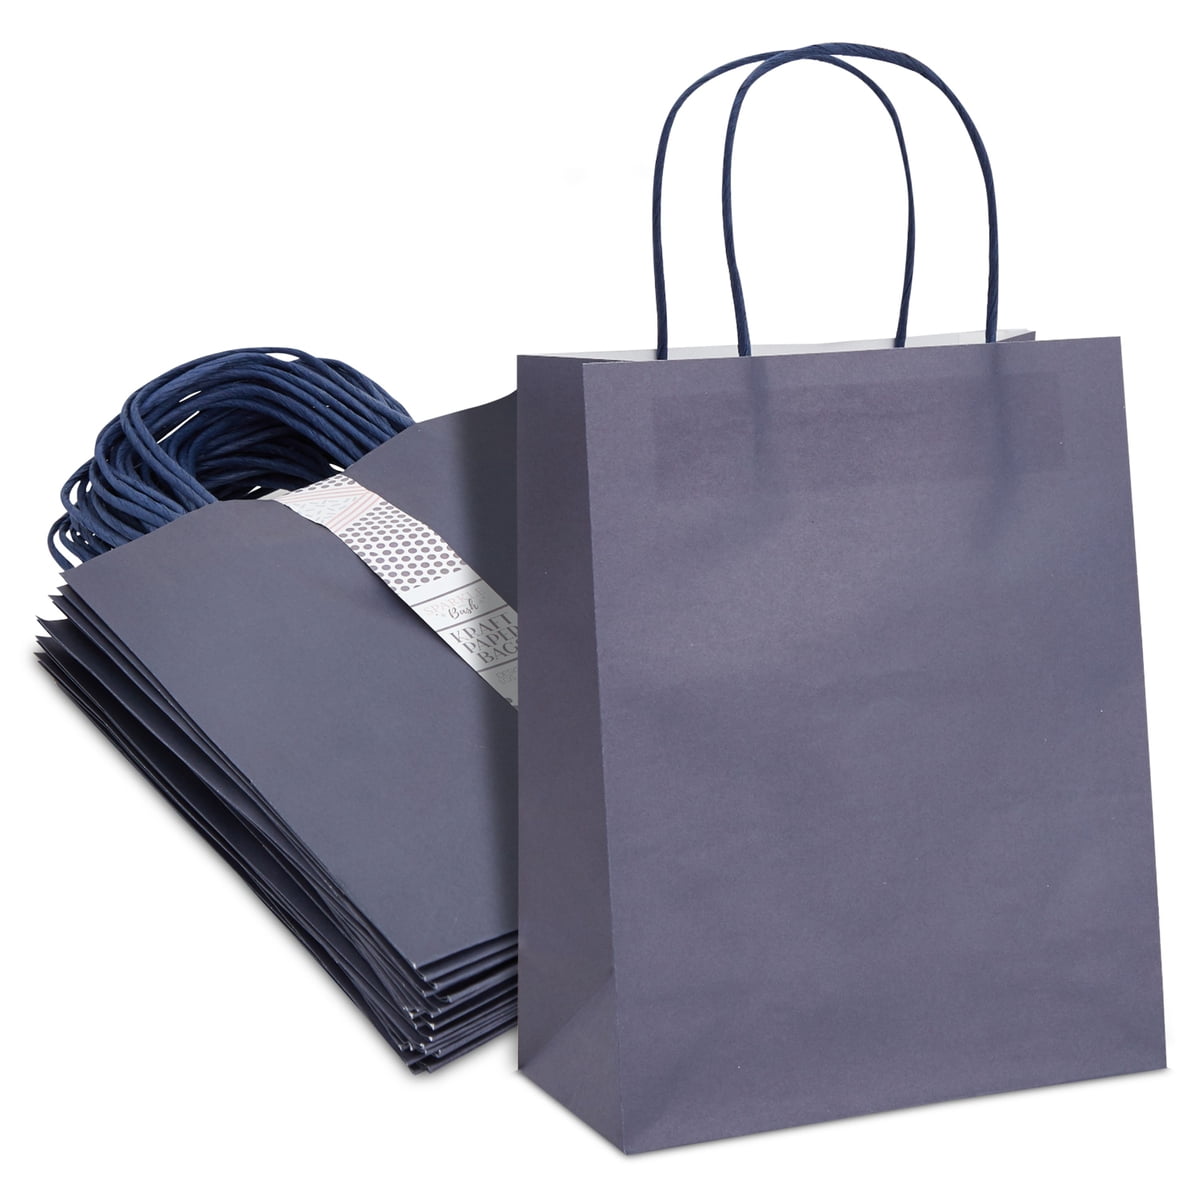 12 Blue Metallic Paper Carrier/ Gift Bags 32cm x 26cm x 8cm 